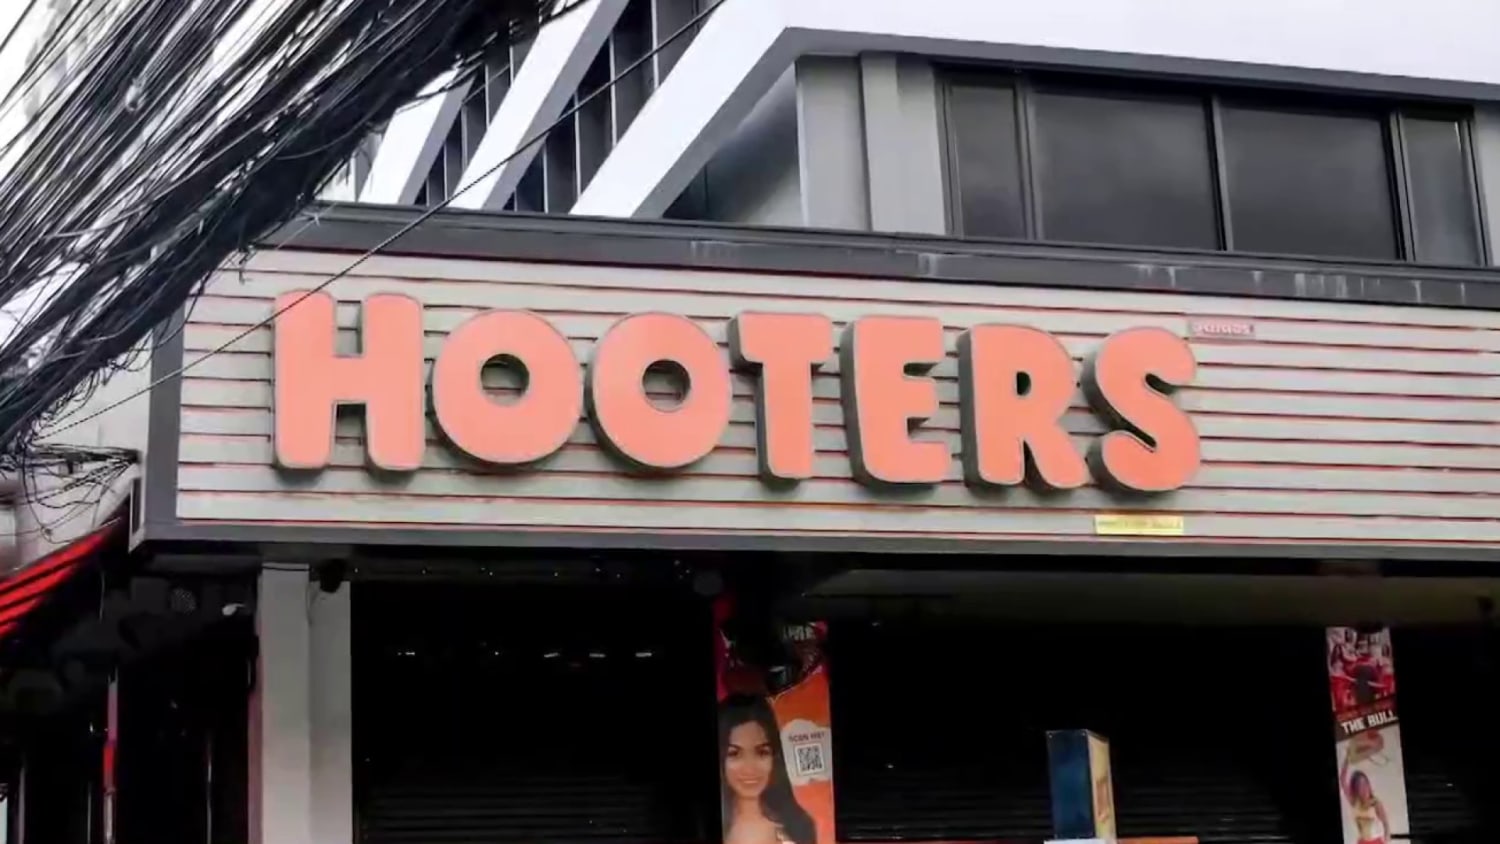 Hooters New Uniforms: TikTok Videos Critique Short Shorts